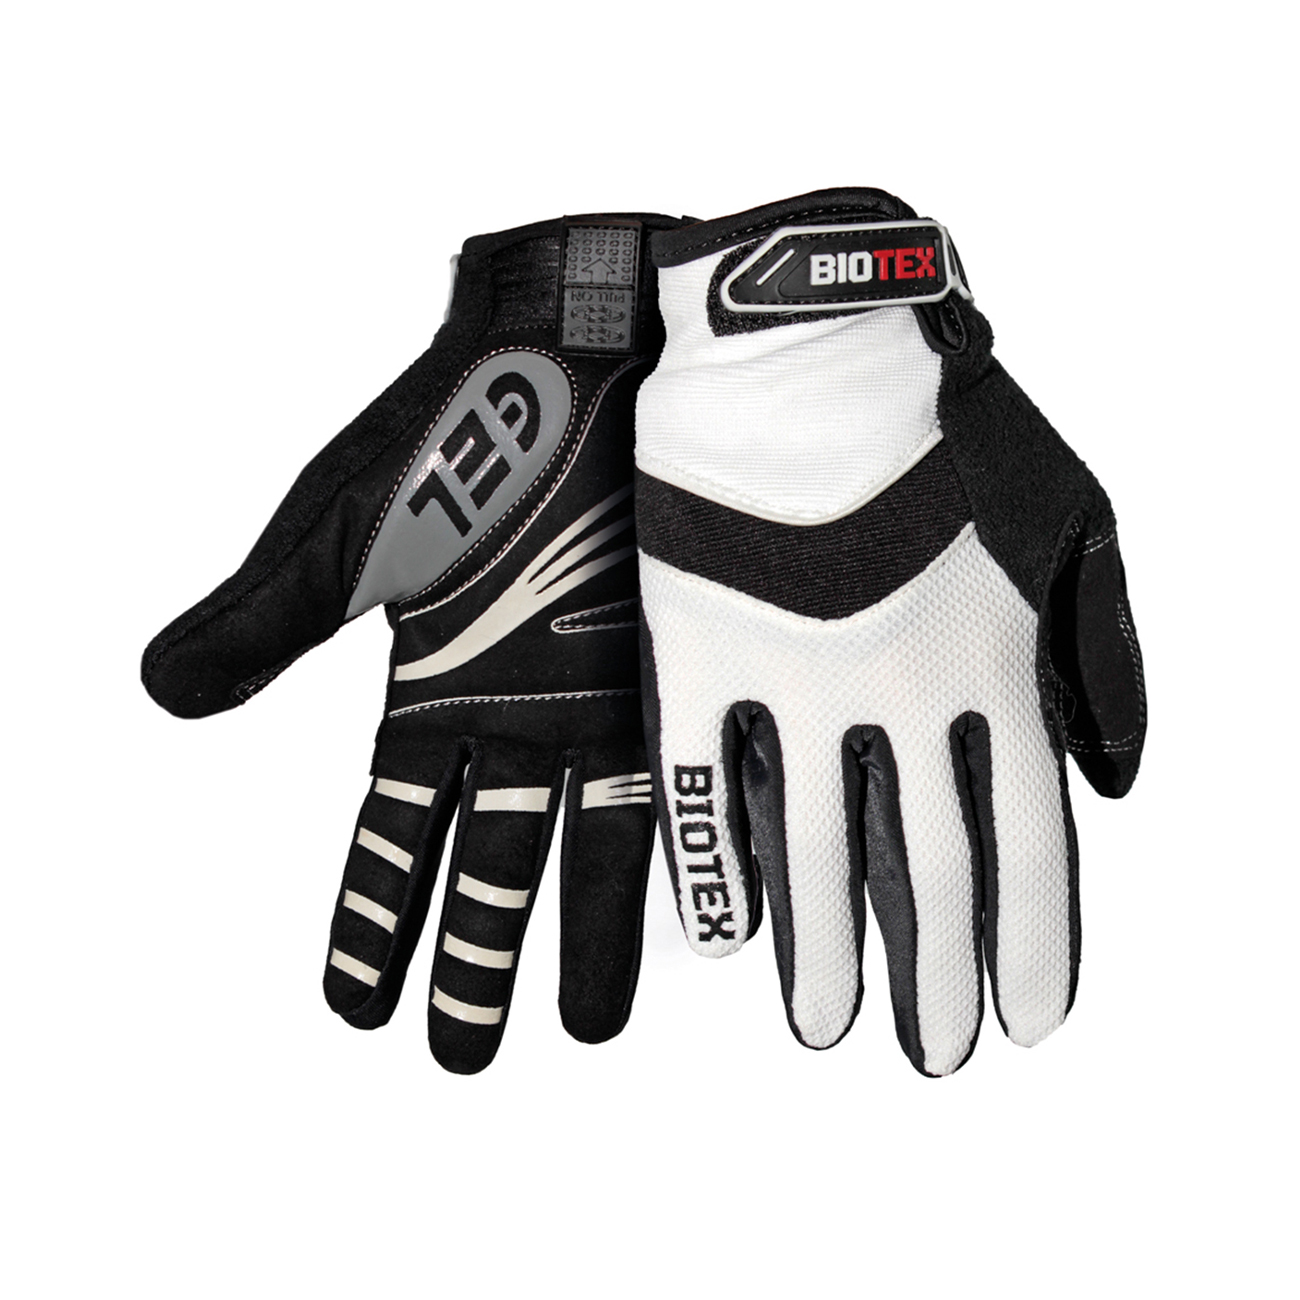 
                BIOTEX Cyklistické rukavice dlhoprsté - SUMMER - biela/čierna S
            